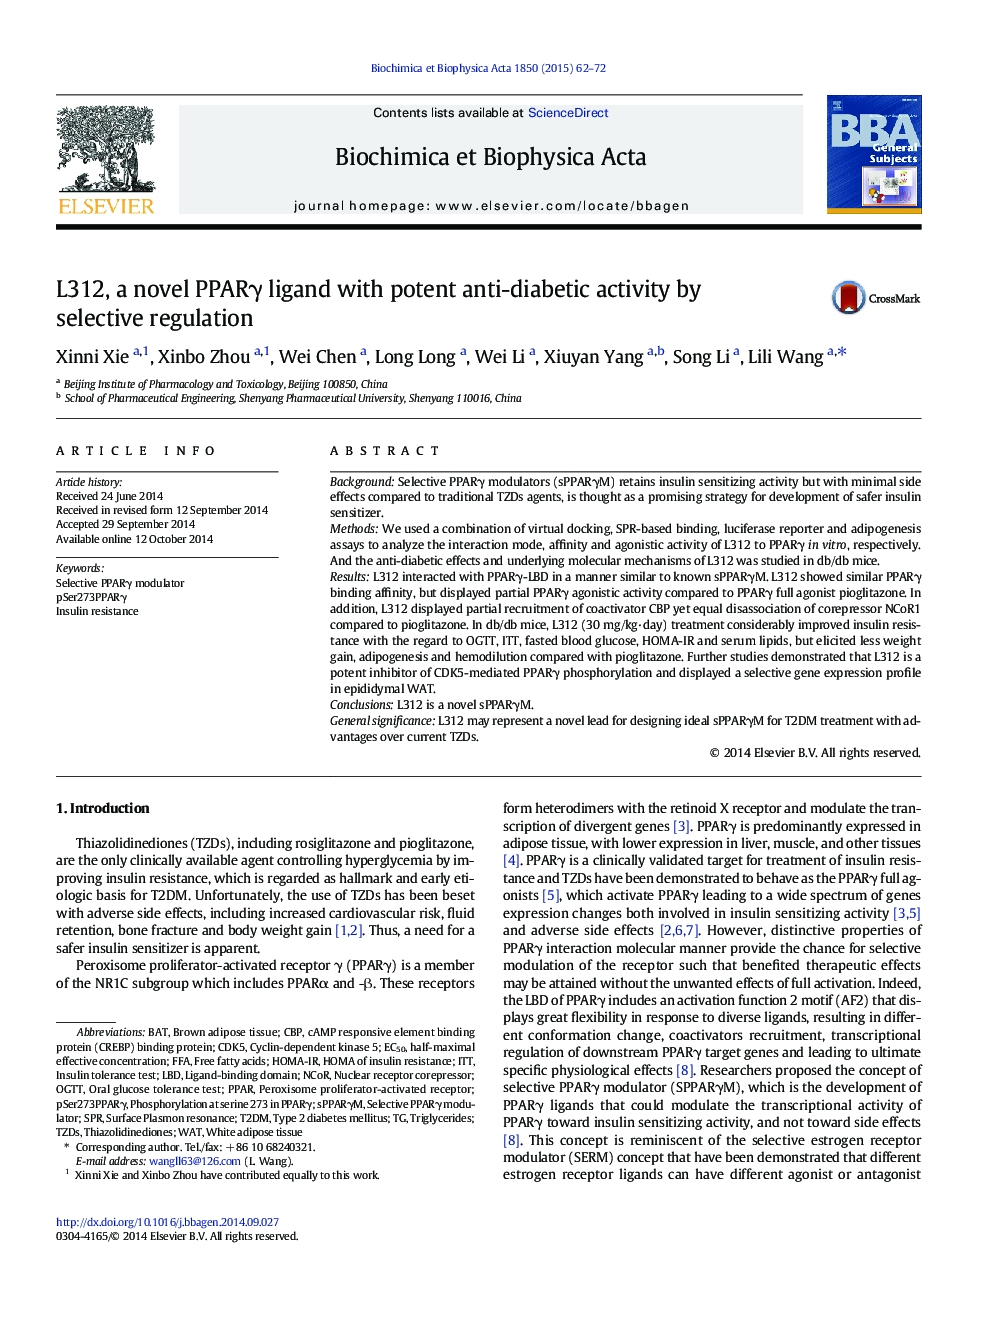 L312, a novel PPARÎ³ ligand with potent anti-diabetic activity by selective regulation